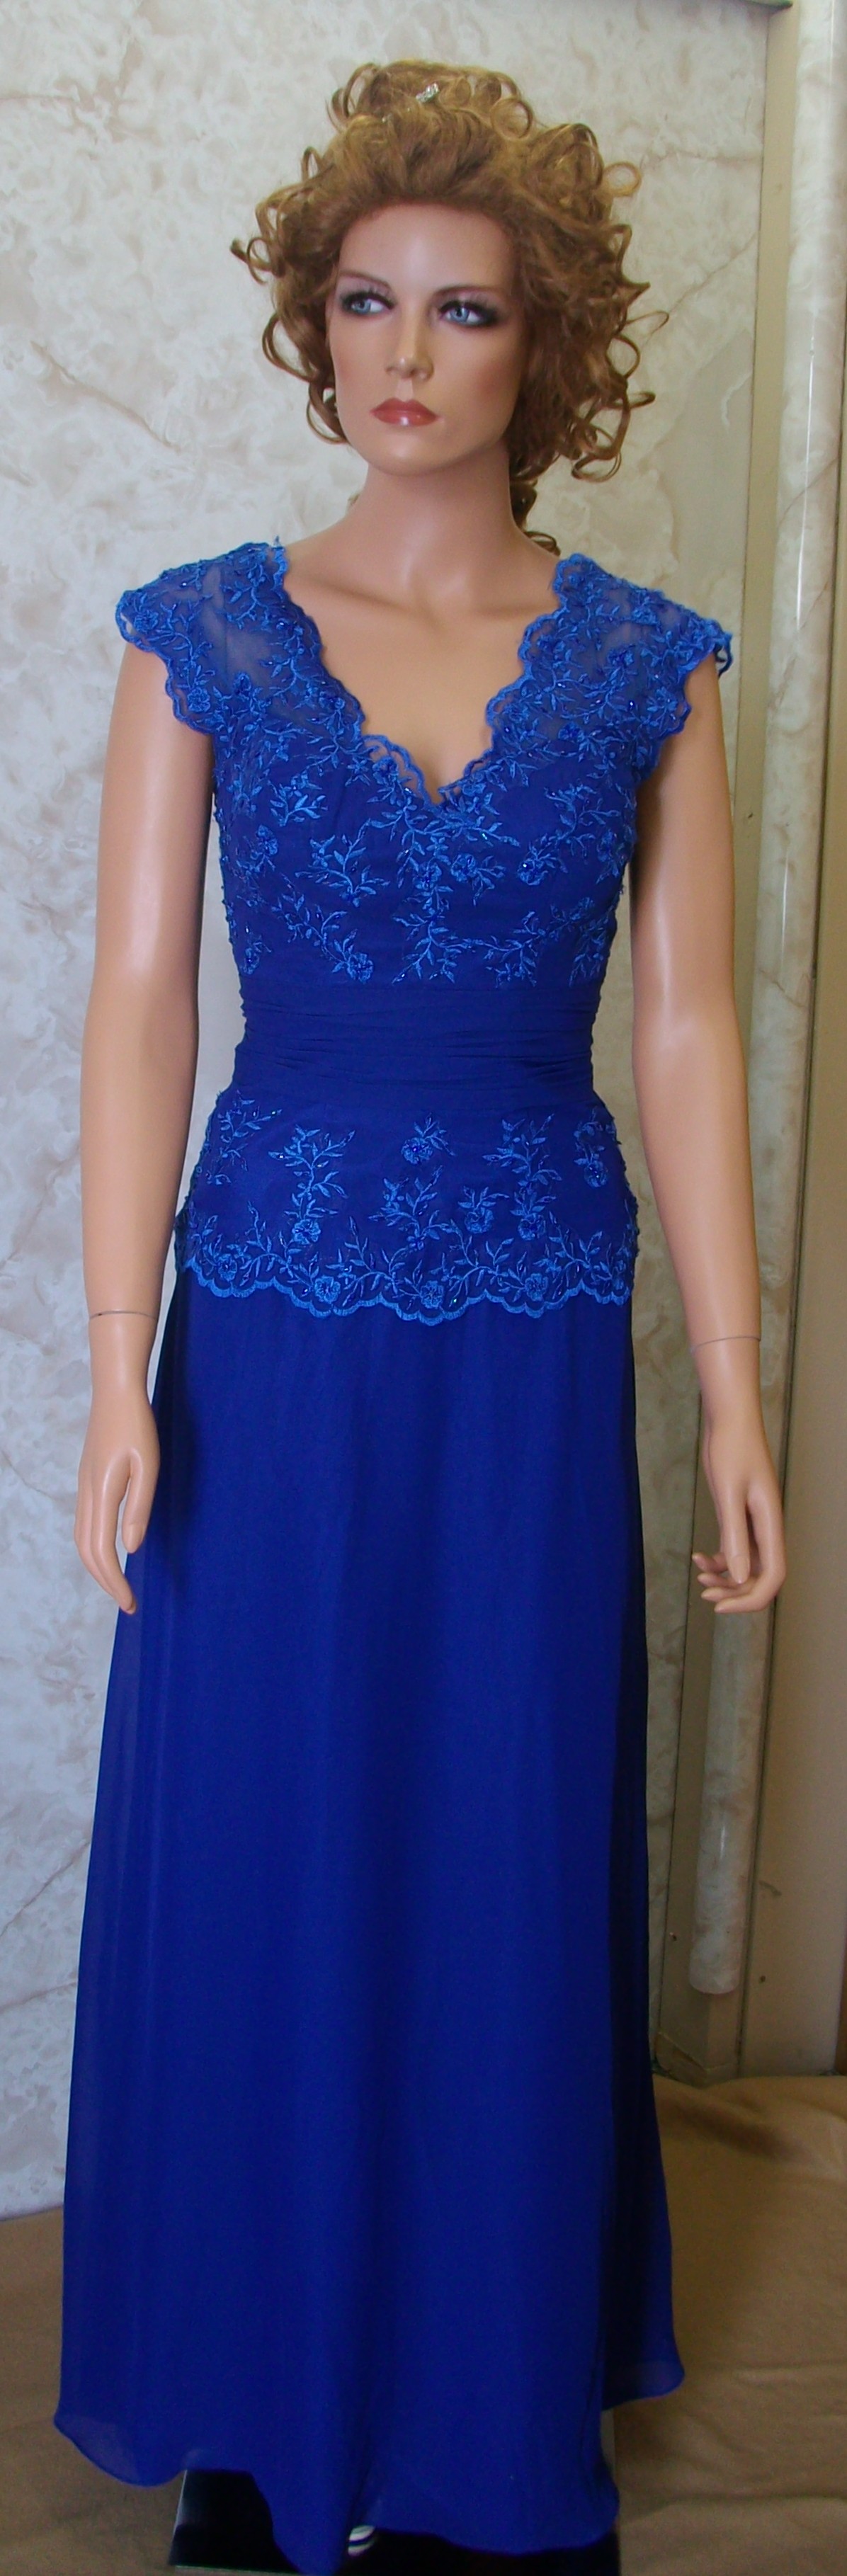 blue lace dress $110